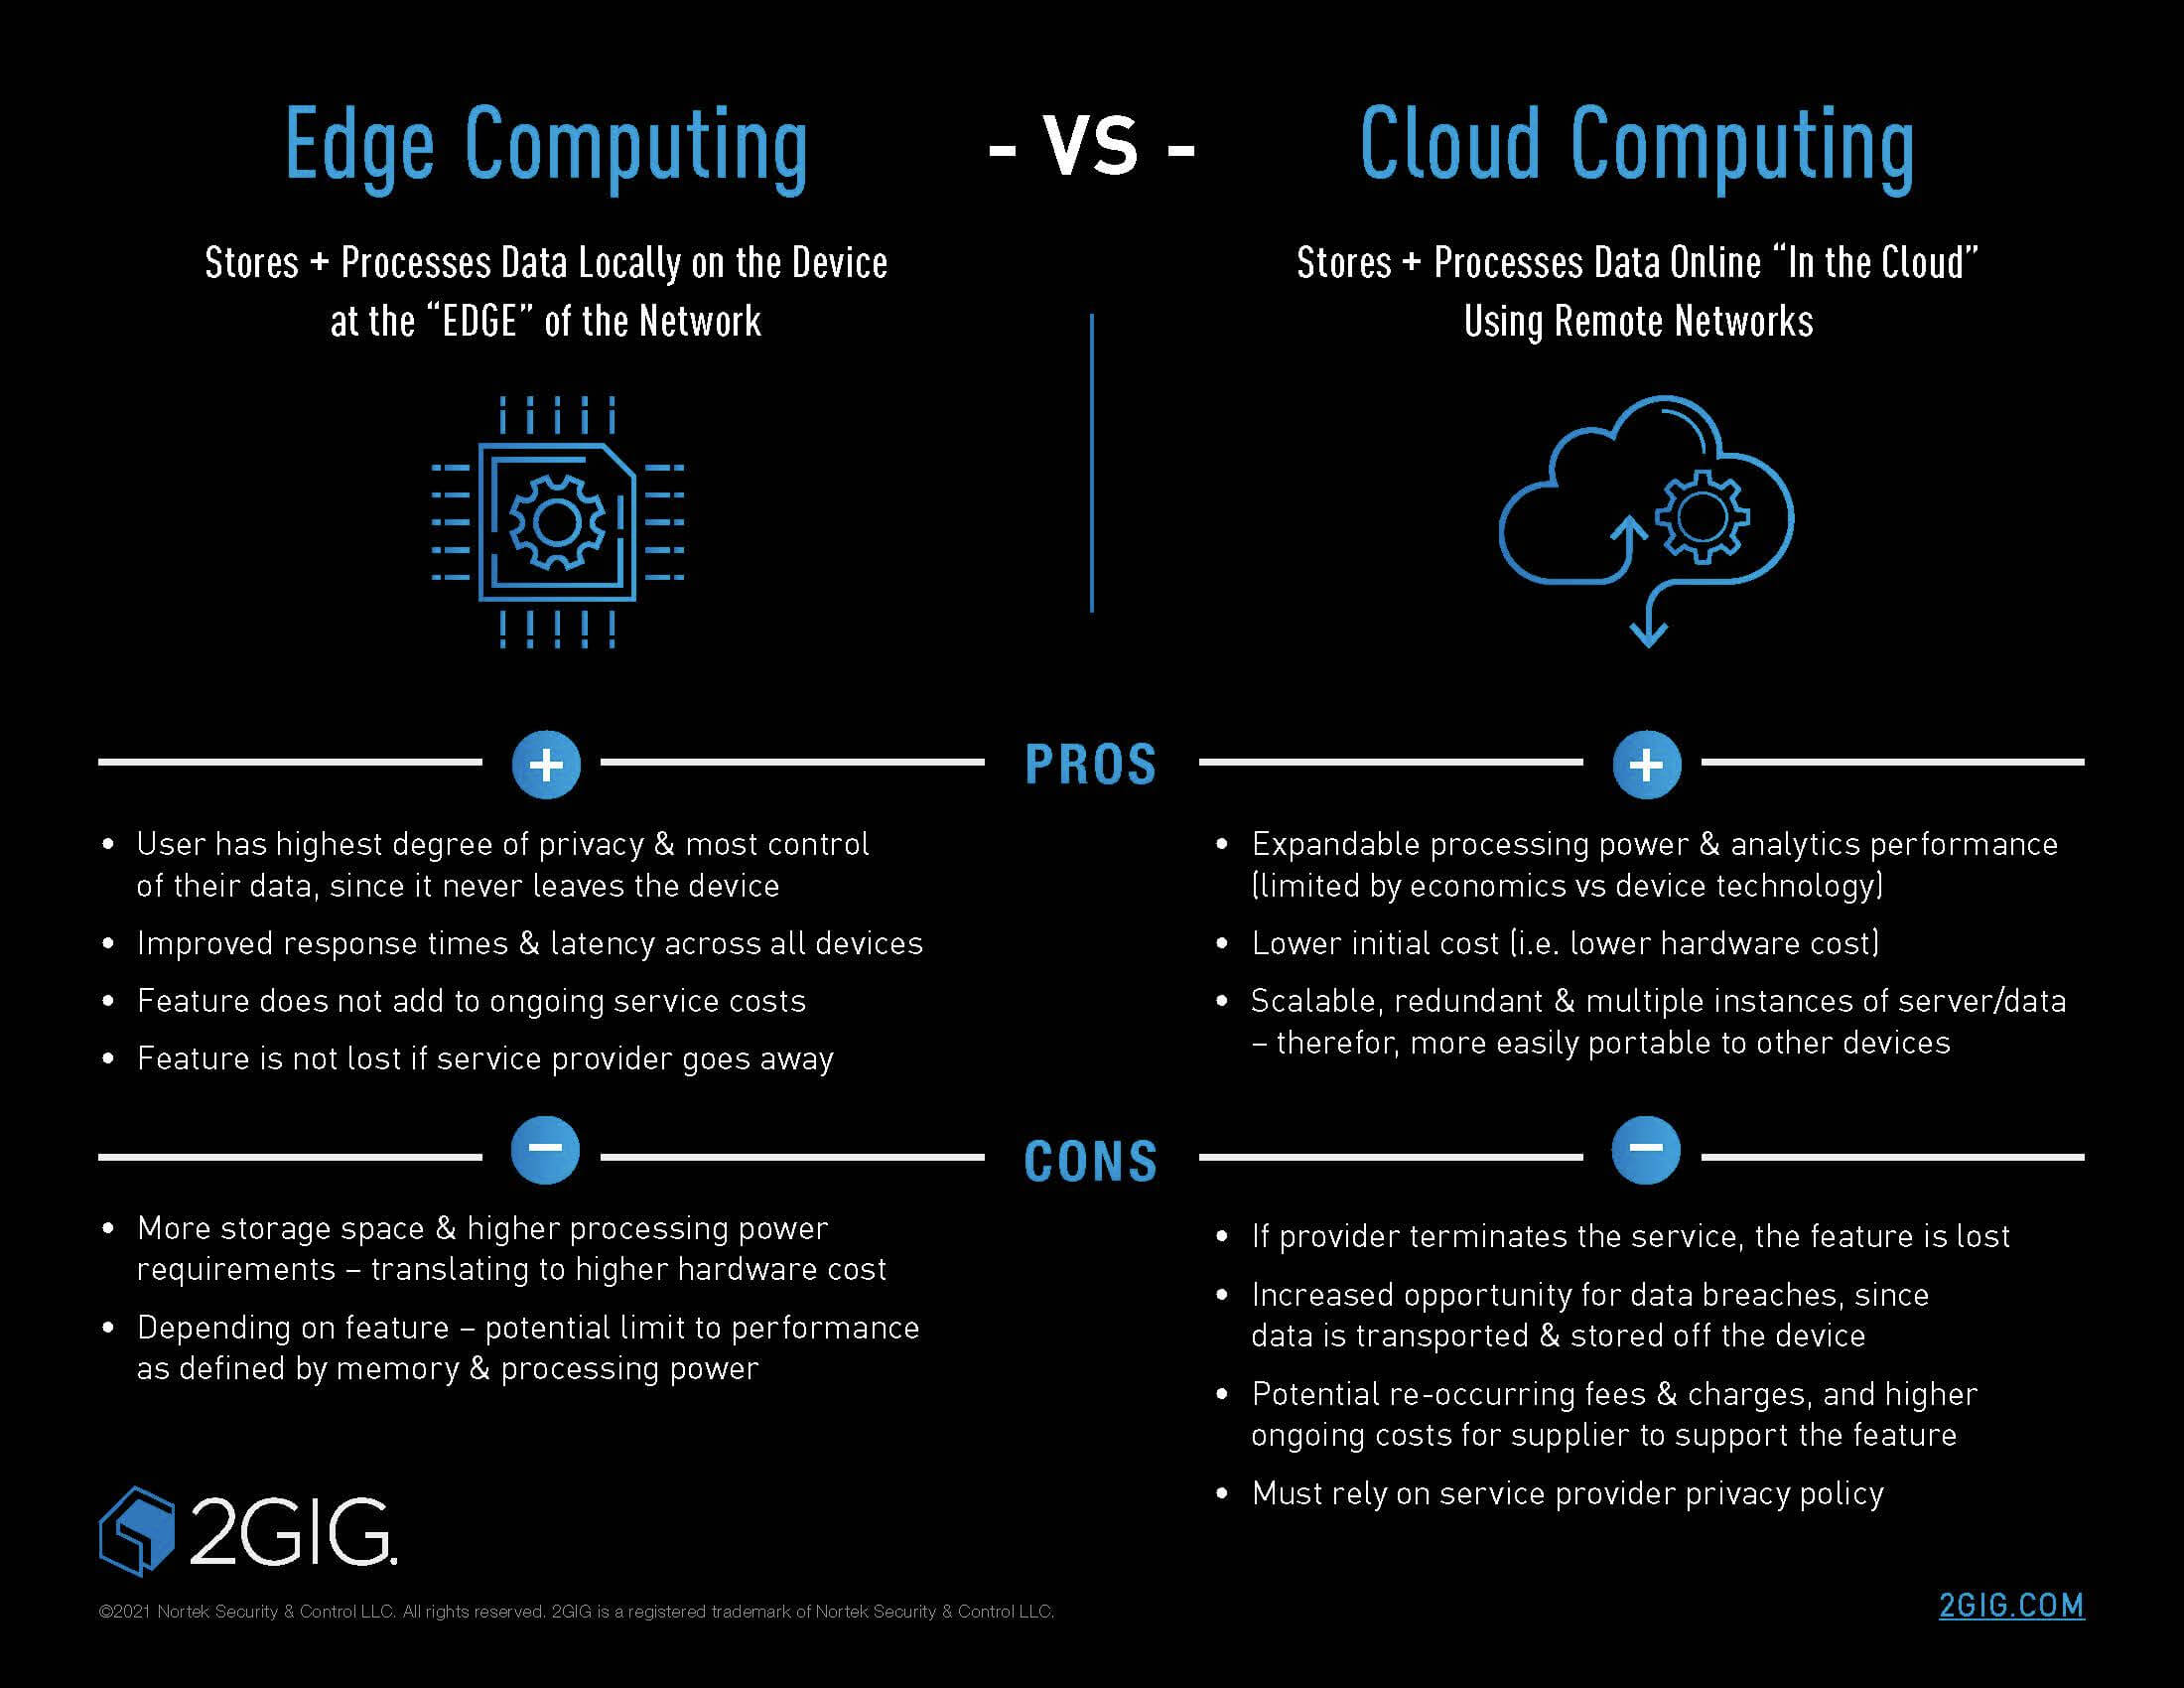 Edge vs Cloud Computing